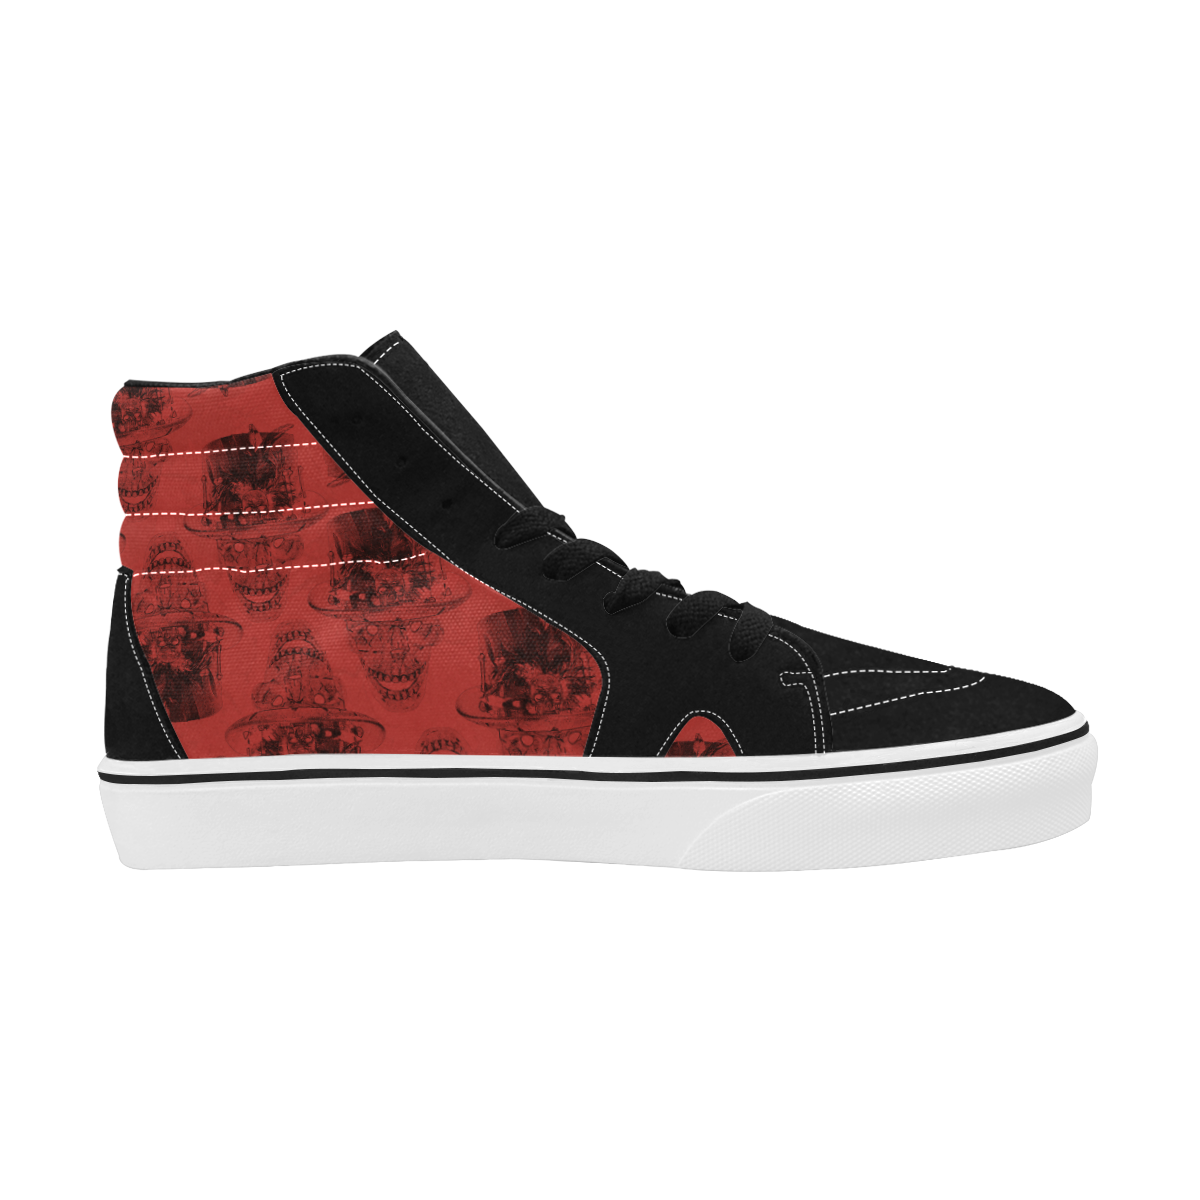 SAMSON WEAR RED Women's High Top Skateboarding Shoes (Model E001-1)